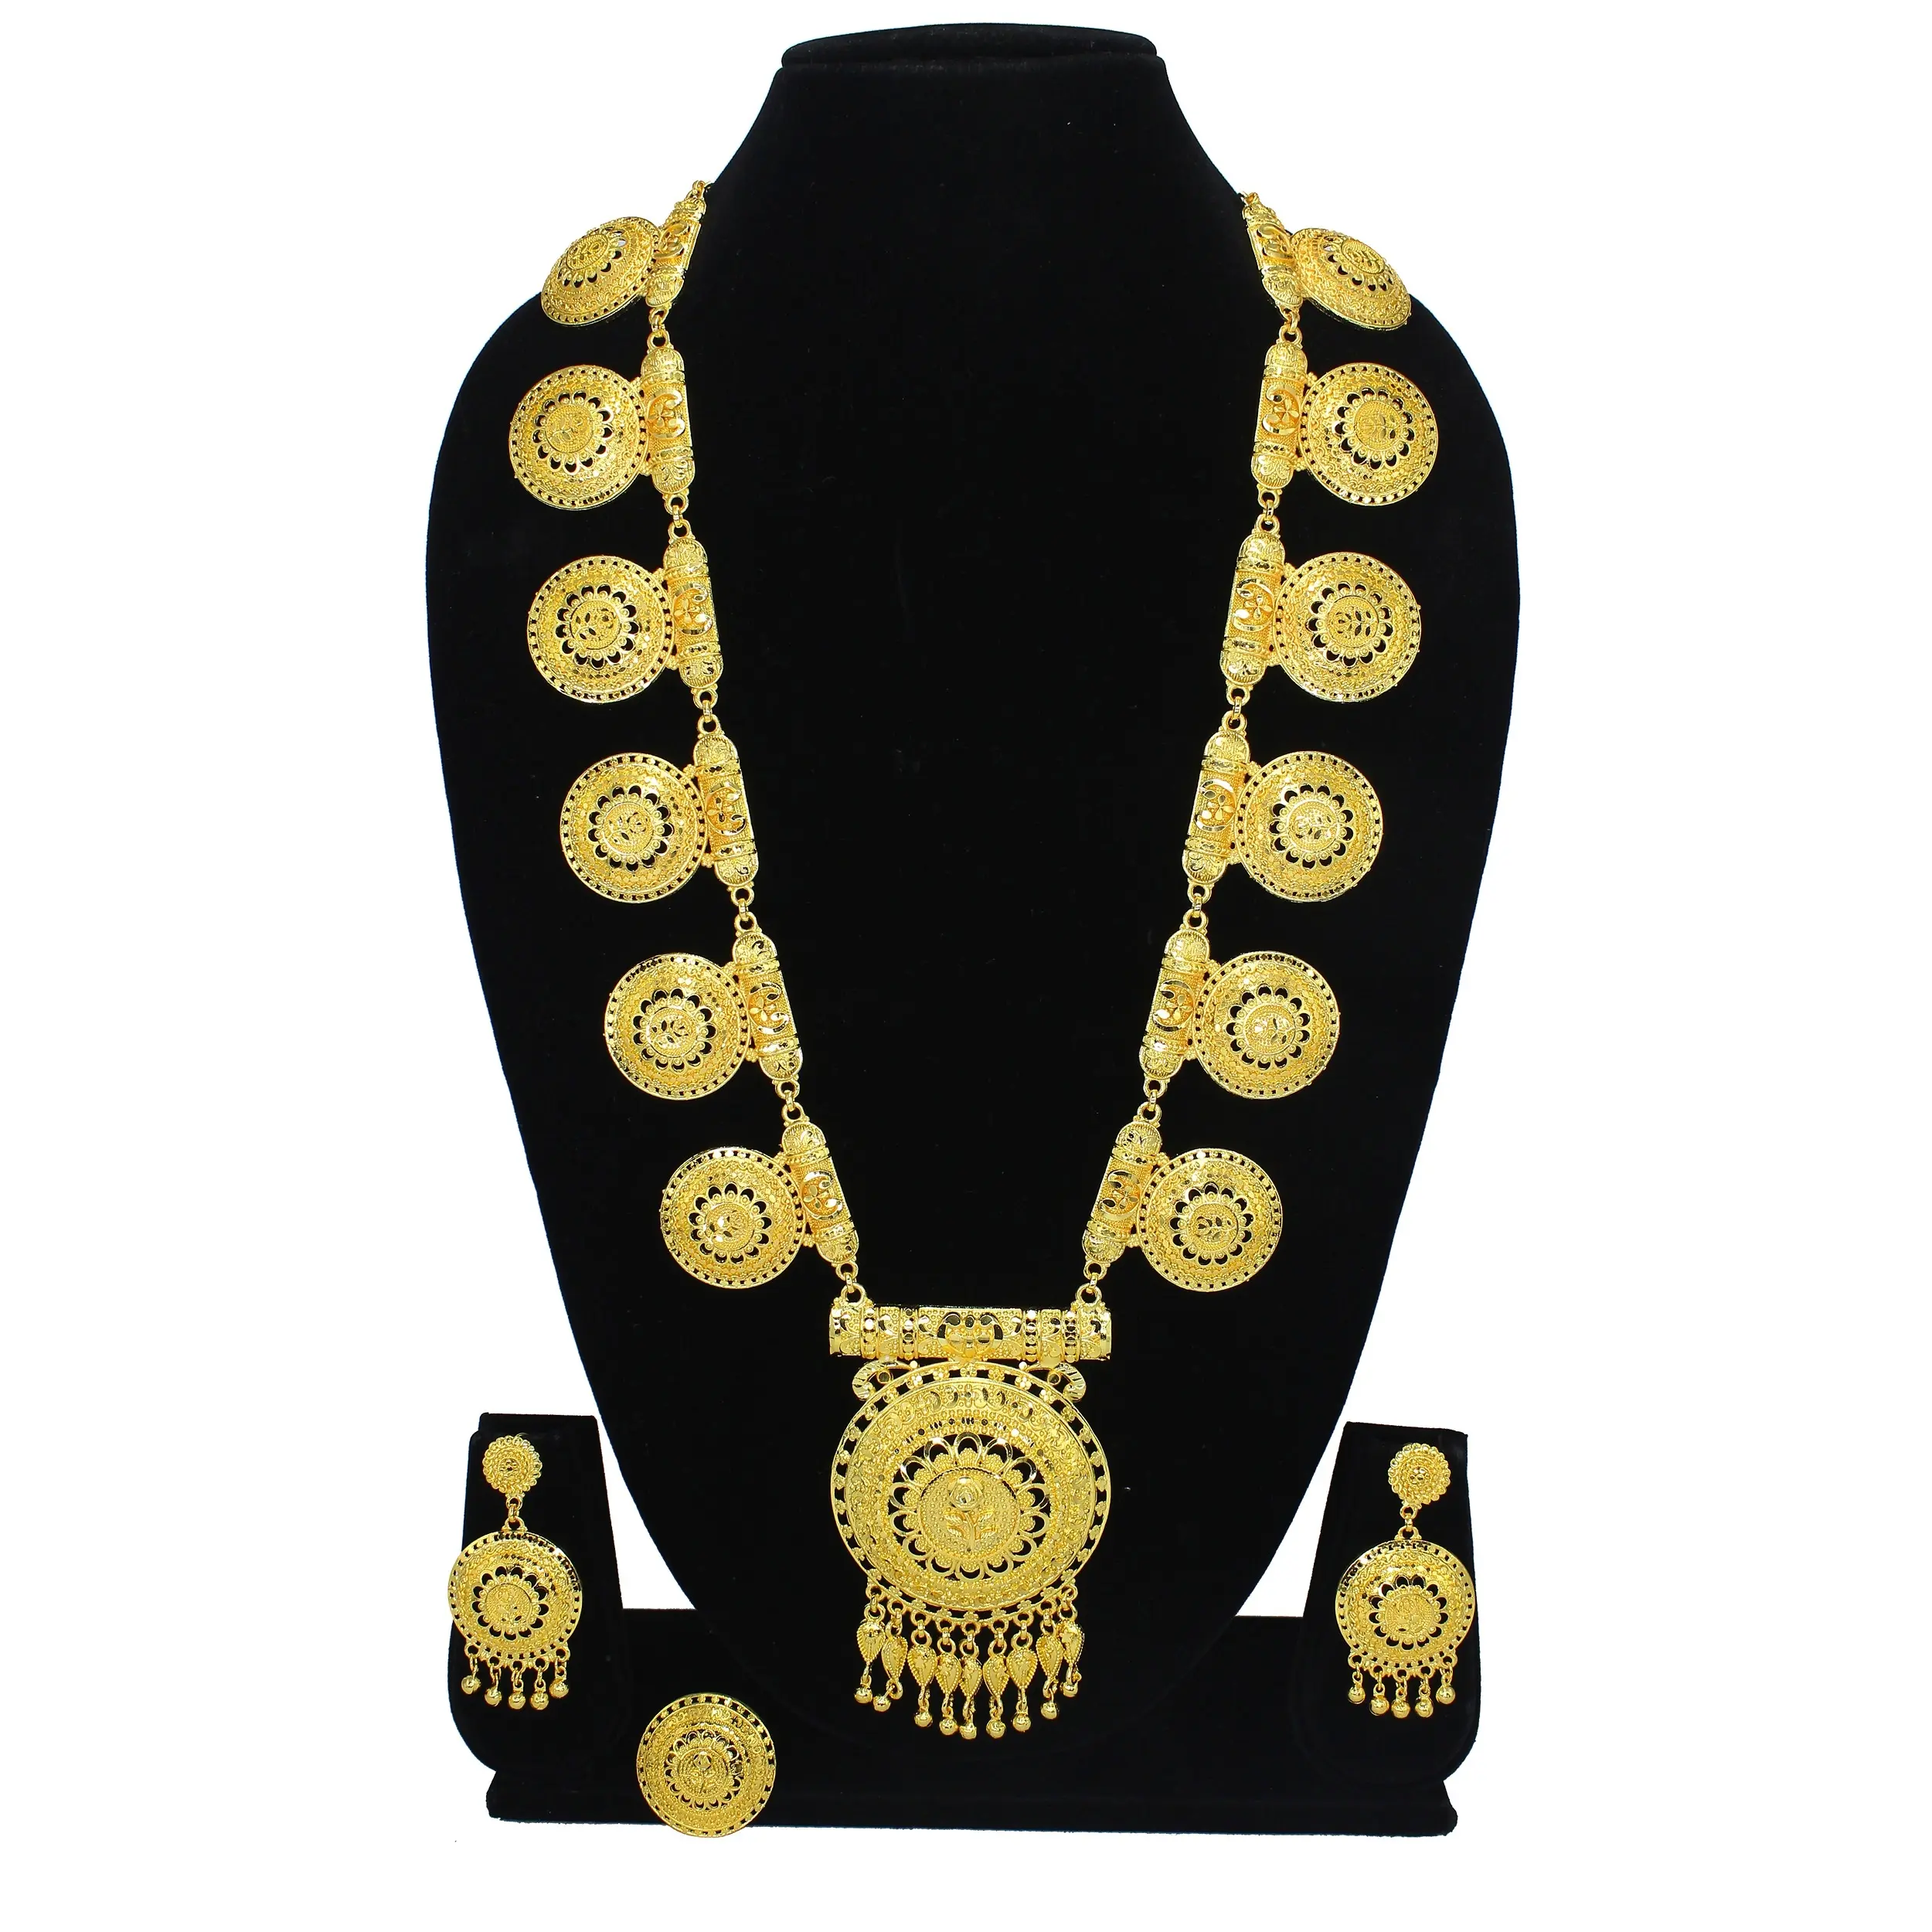 Alta Qualidade Luxo 24K 18K Cor do Ouro Africano Dubai Banhado A Ouro Conjuntos De Jóias de luxo dubai jóias conjuntos para as mulheres